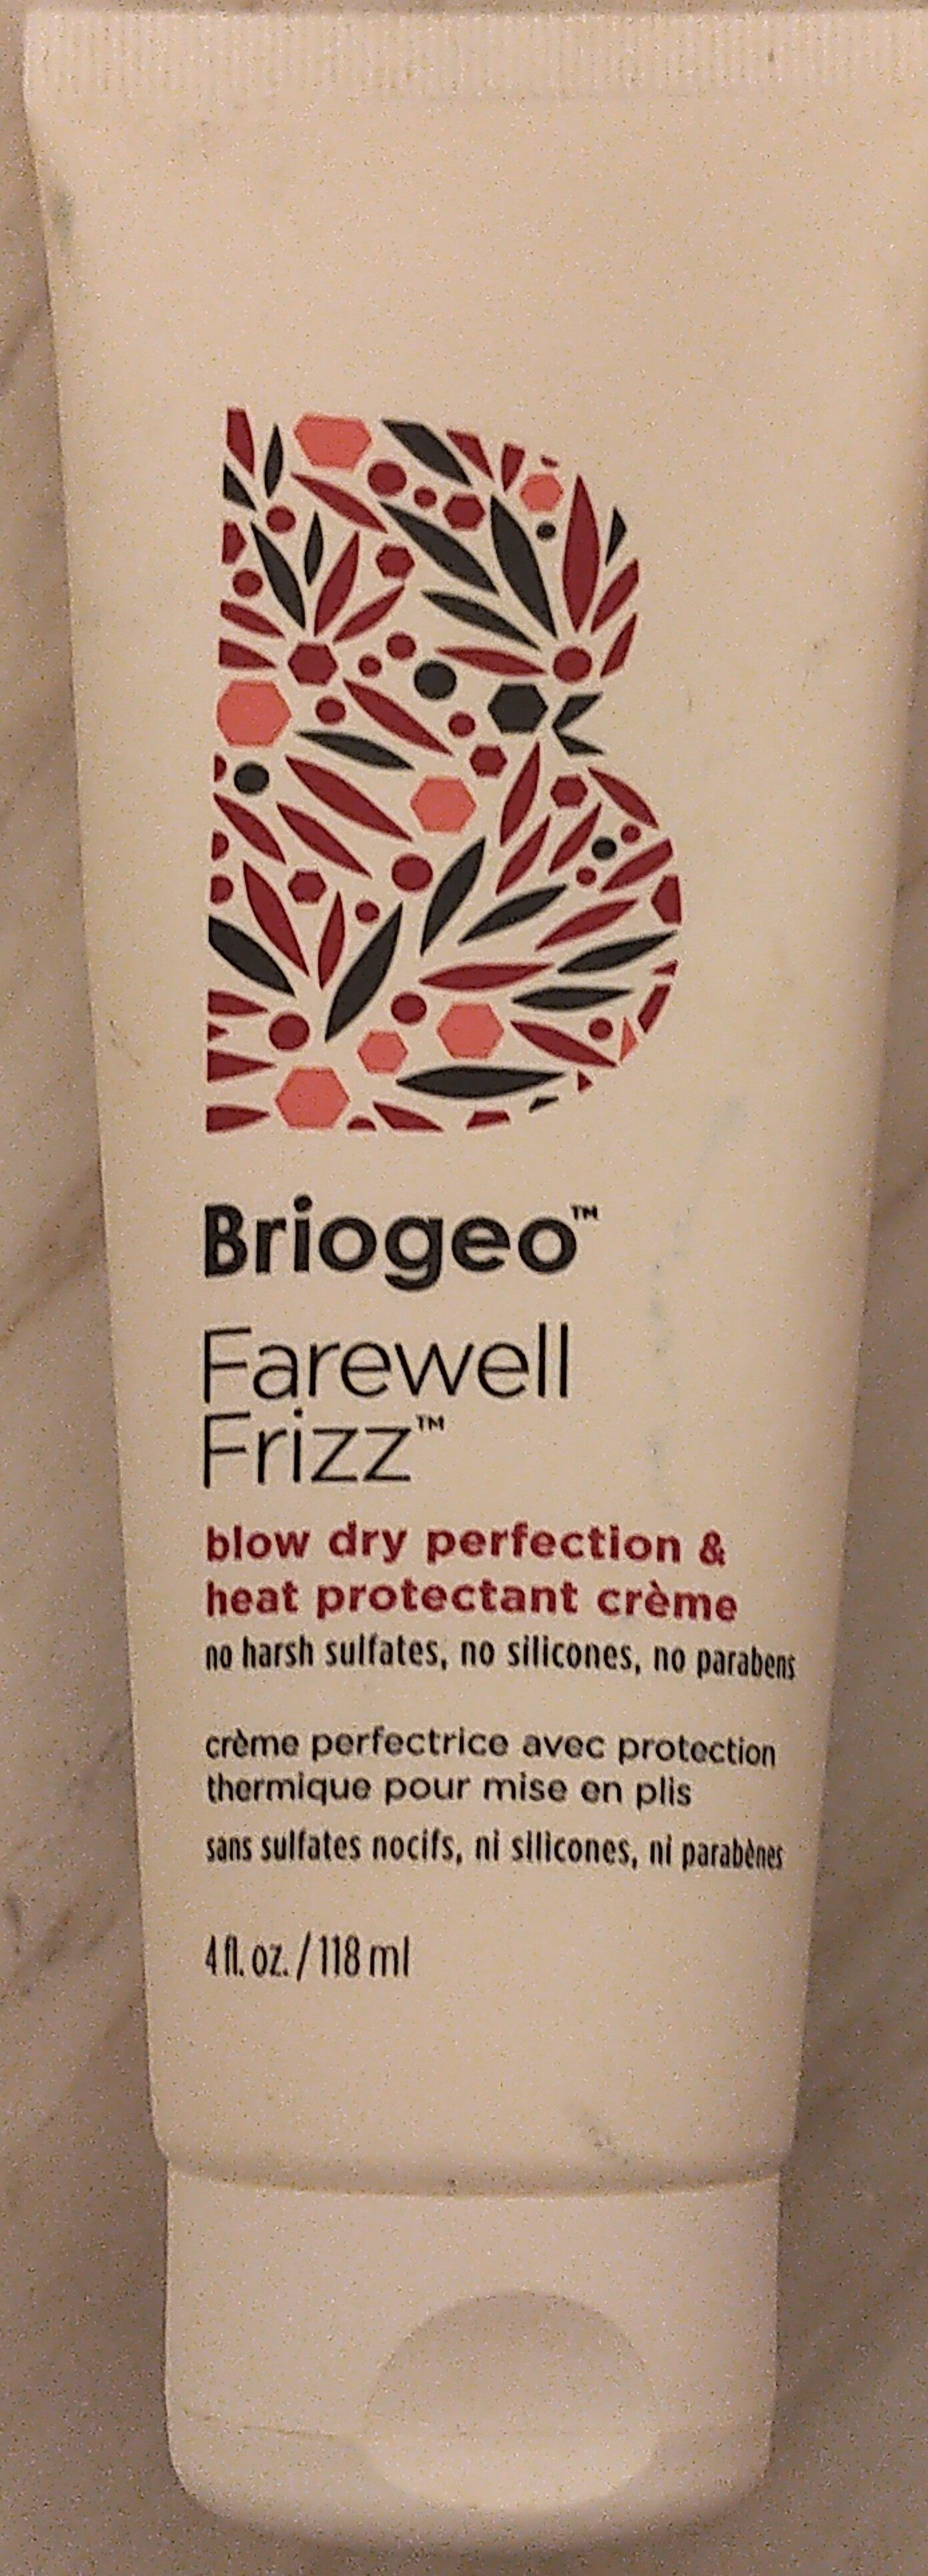 Briogeo Farewell Frizz Blow Dry Perfection & Heat Protectant Crème - מוצר - en